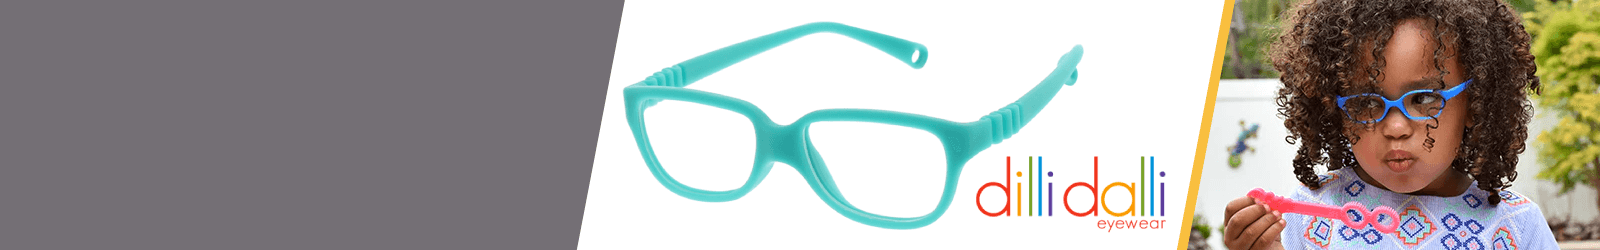 Dilli Dalli Glasses, Frames, and Eyeglasses